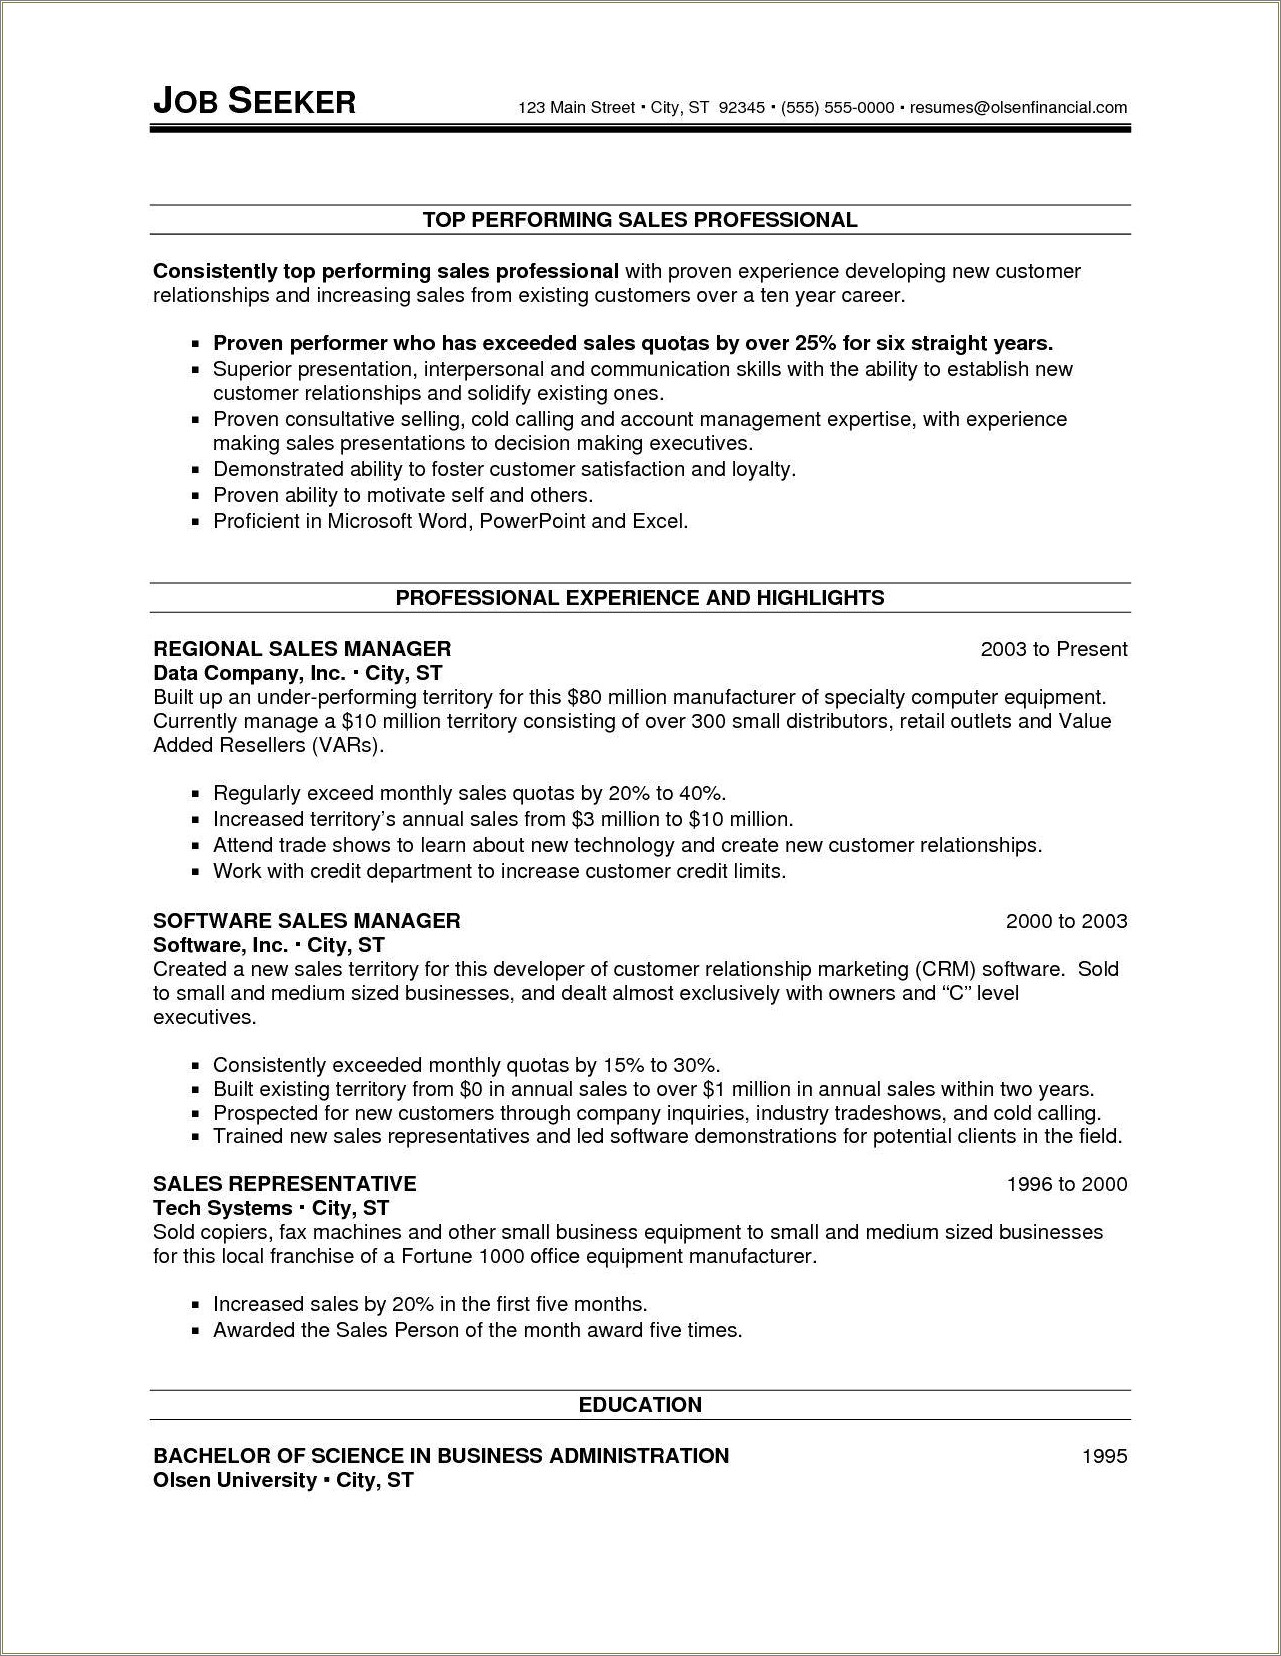 sample resume 20 years experience